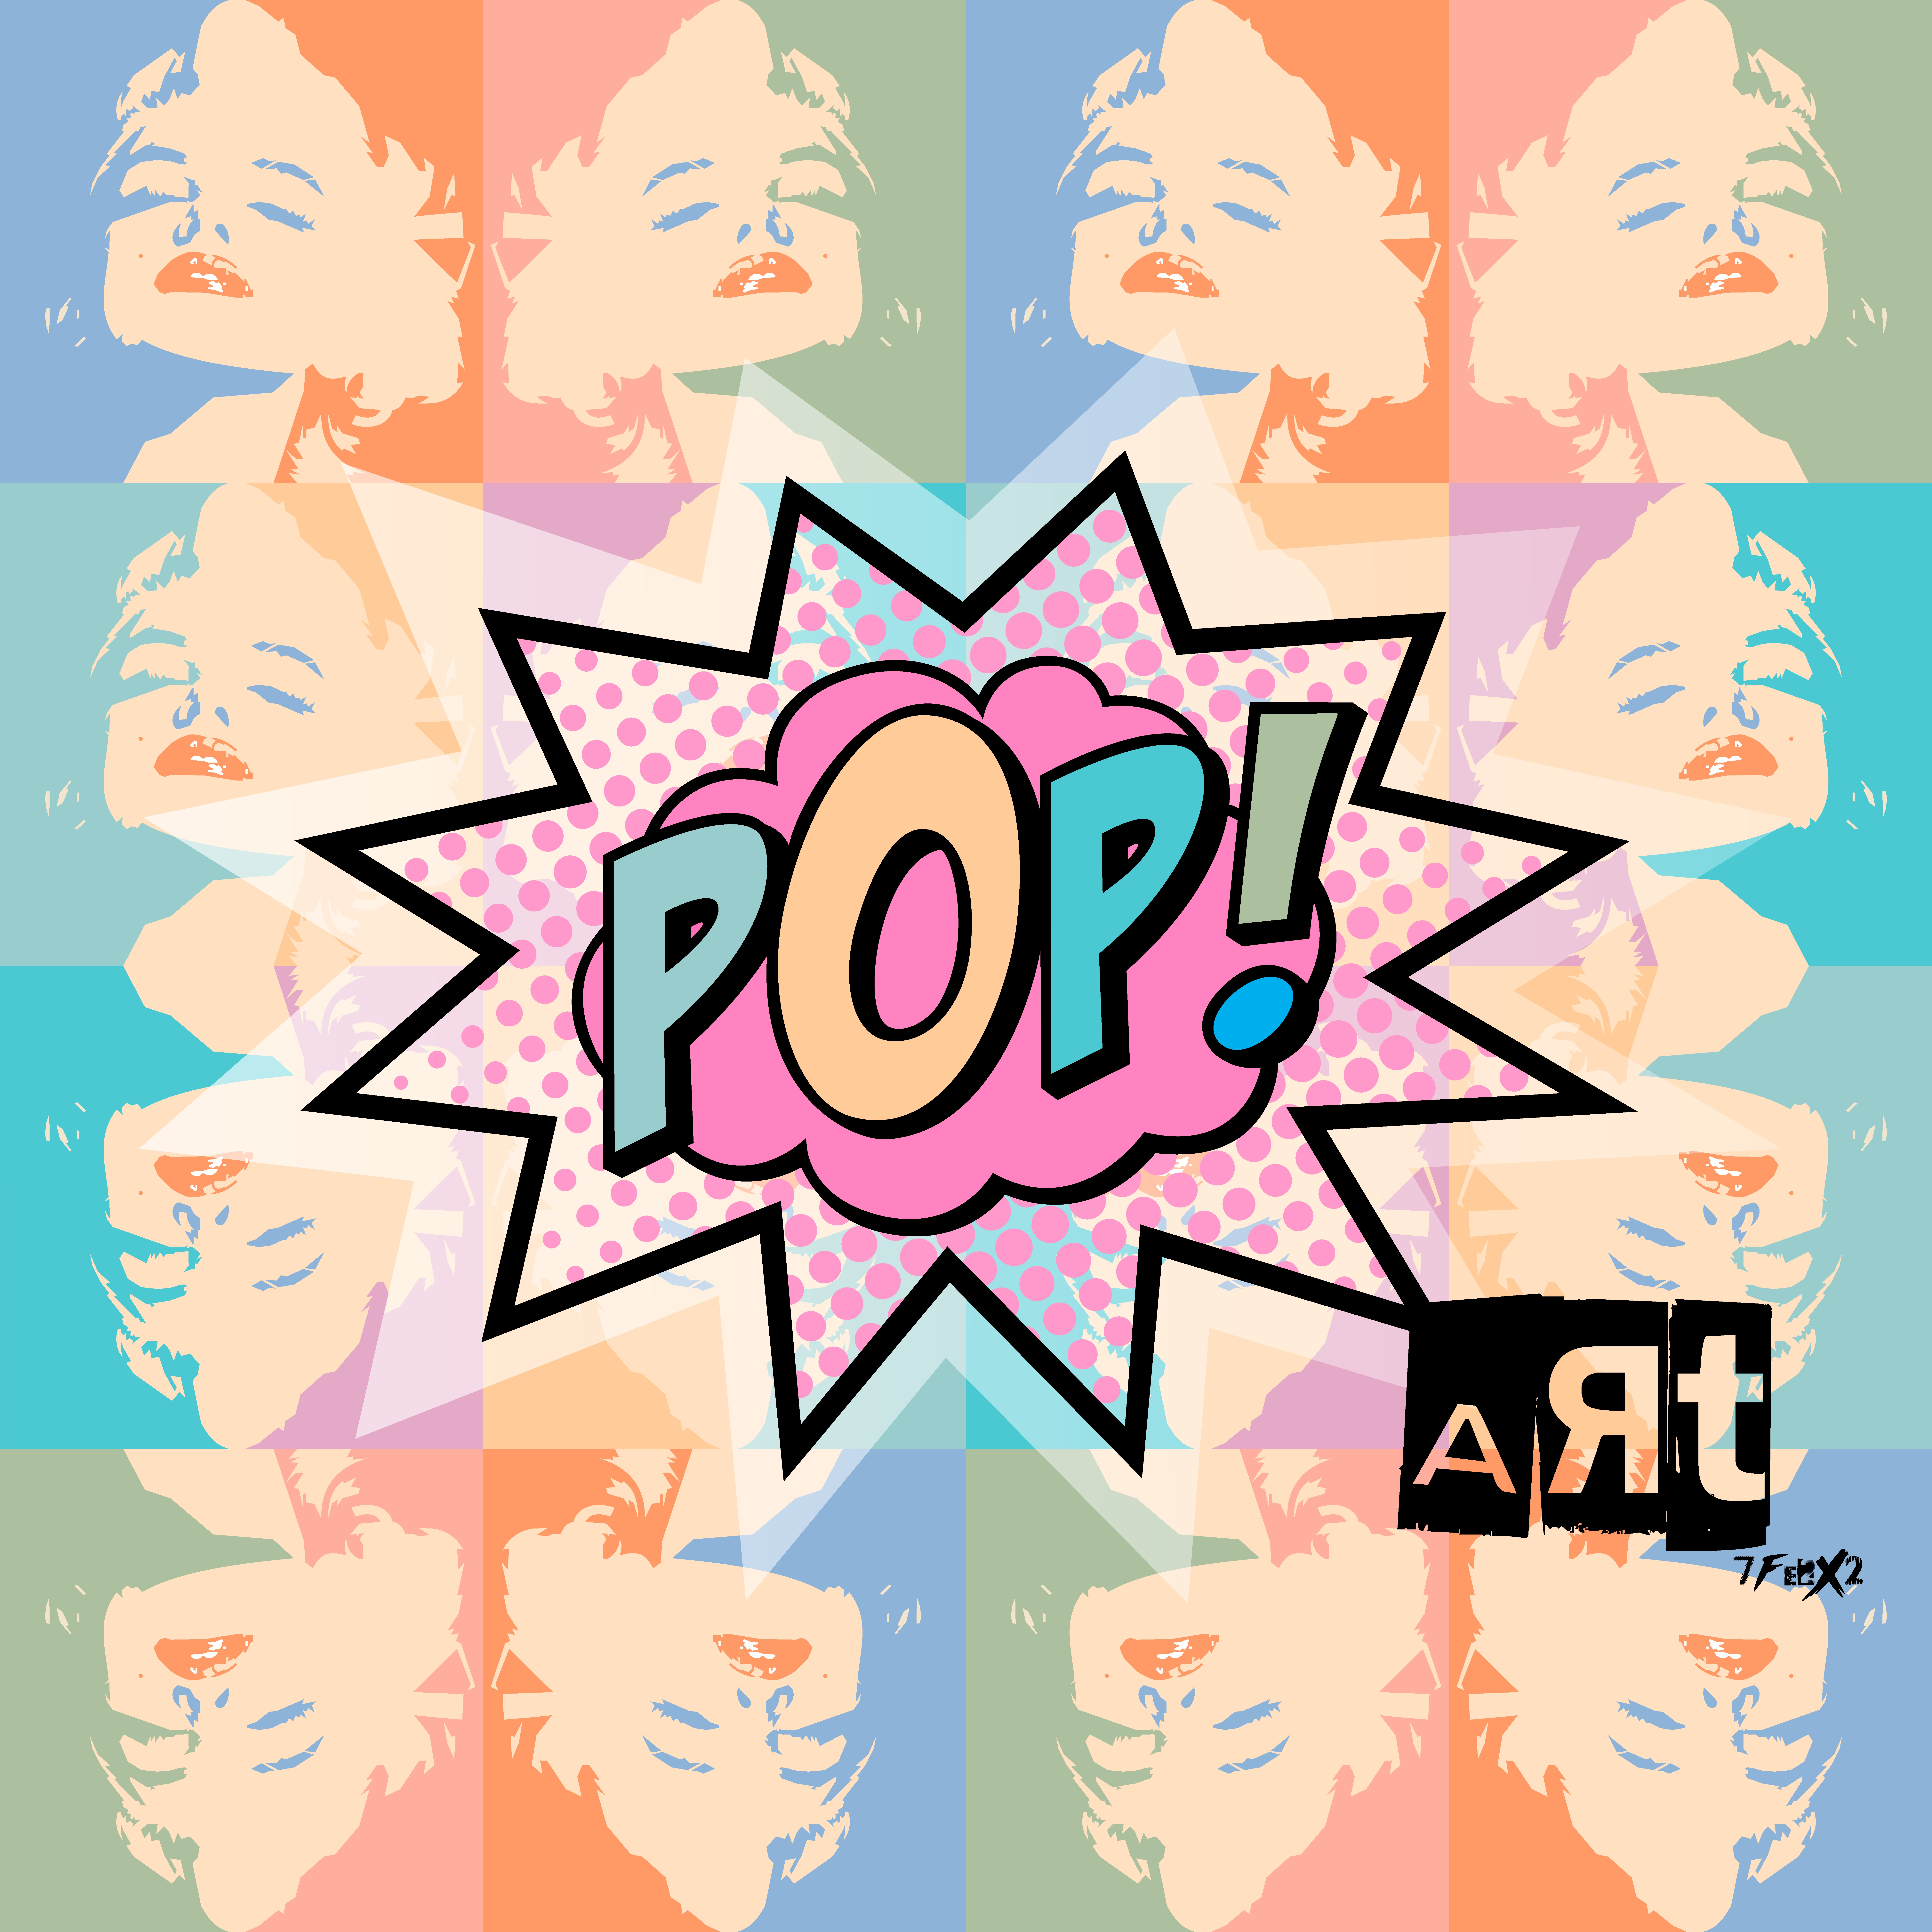 Pop Art with Marilyn by zelko